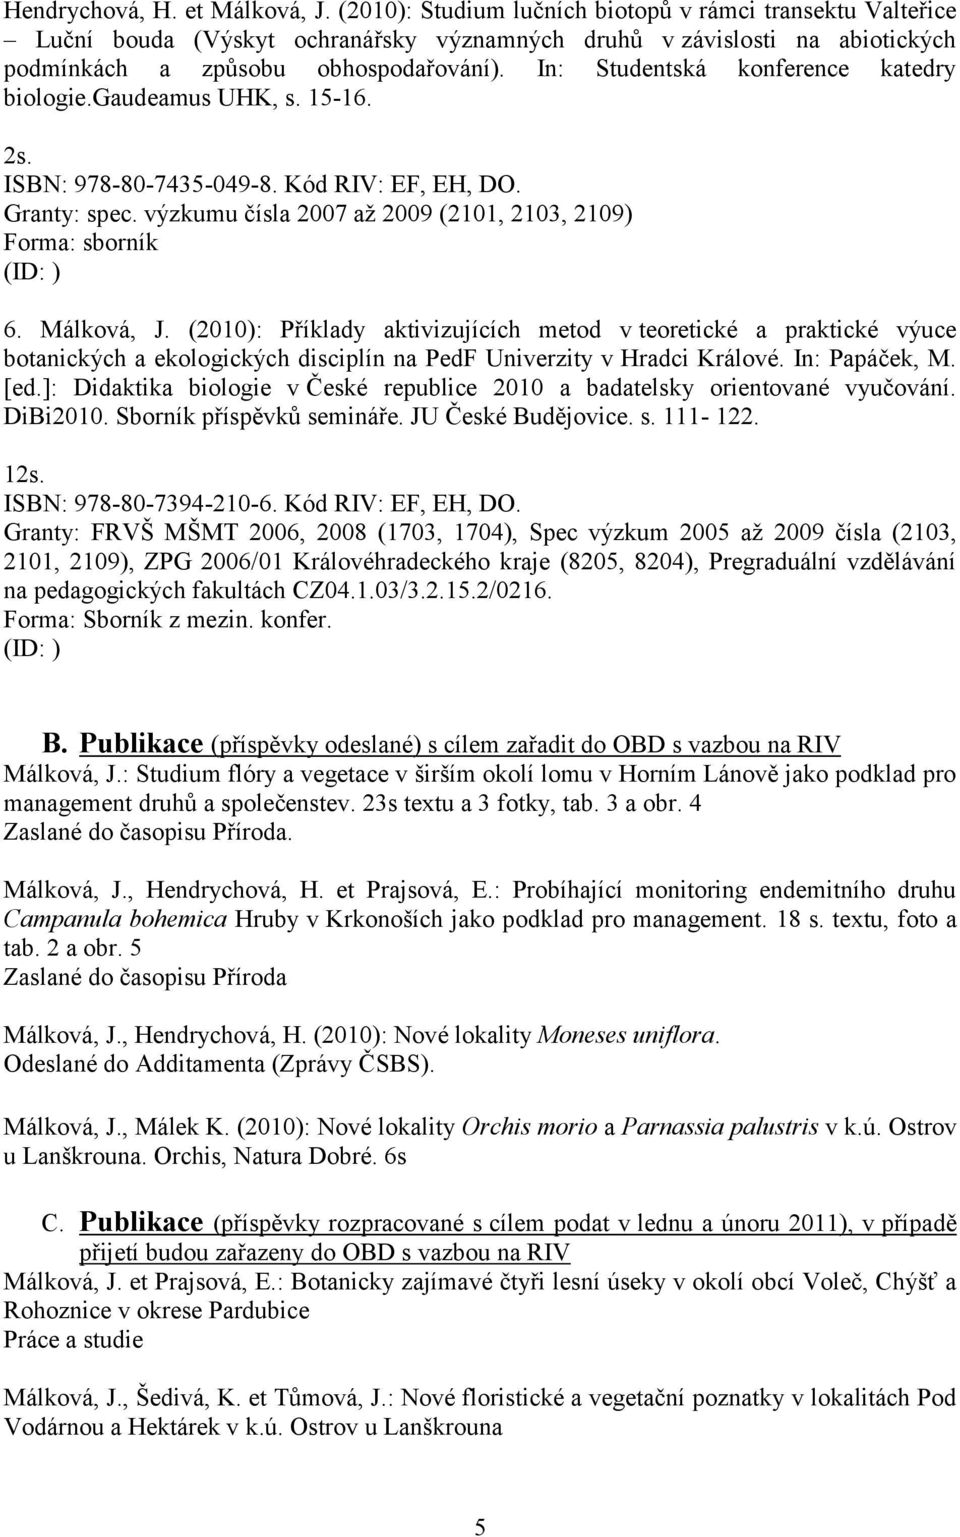 In: Studentská konference katedry biologie.gaudeamus UHK, s. 15-16. 2s. ISBN: 978-80-7435-049-8. Kód RIV: EF, EH, DO. Granty: spec.